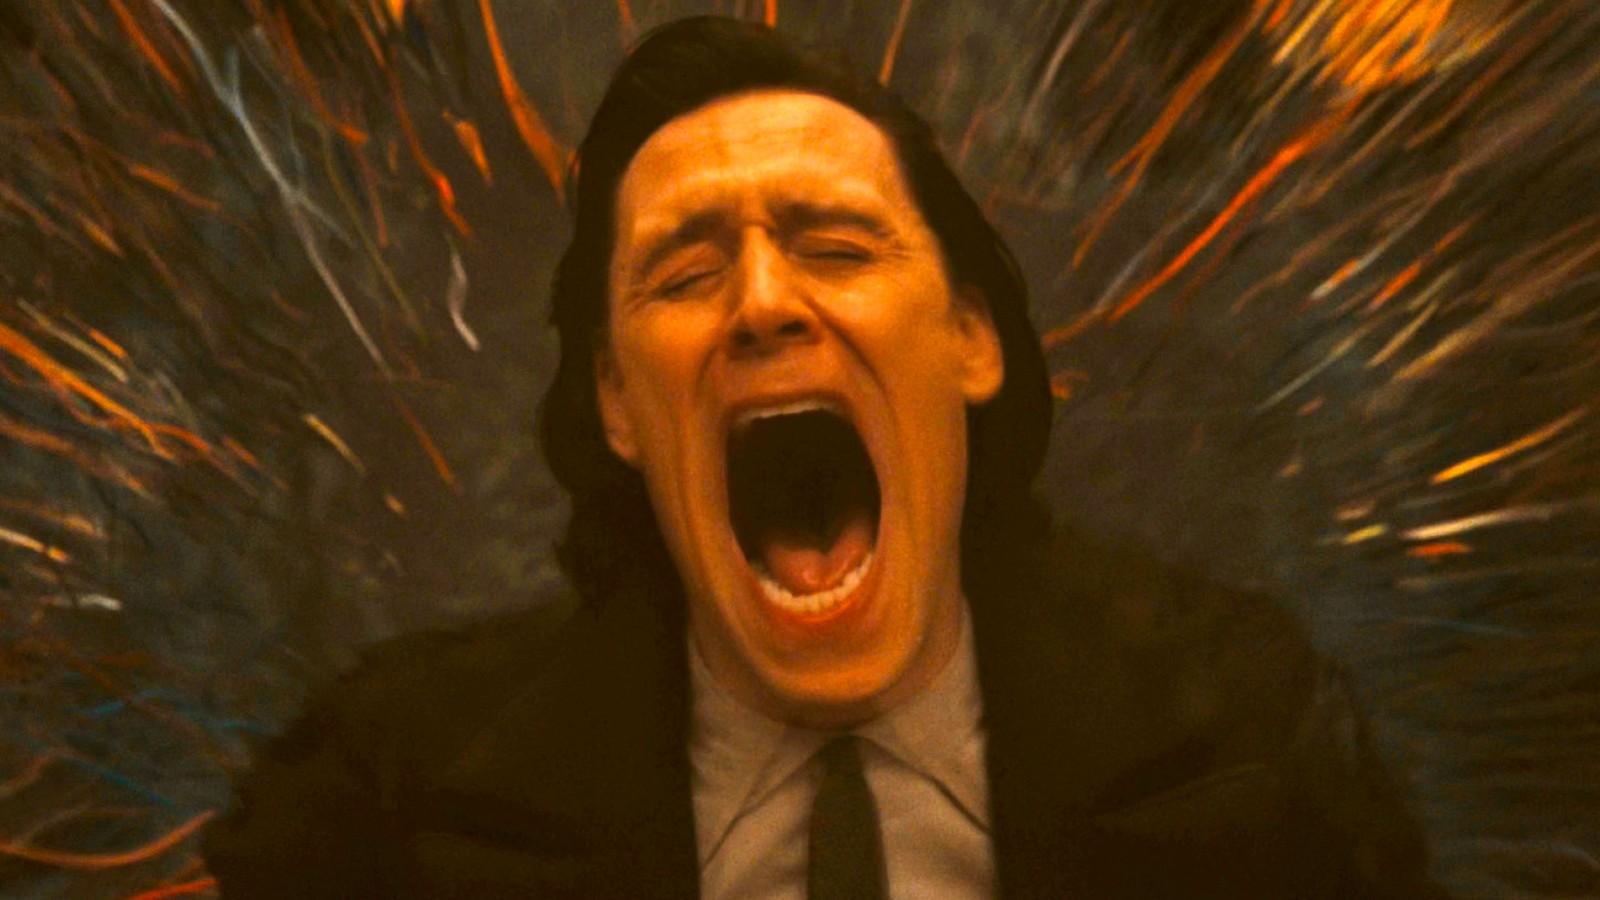 Marvel reveals Echo, Loki season 2 release dates